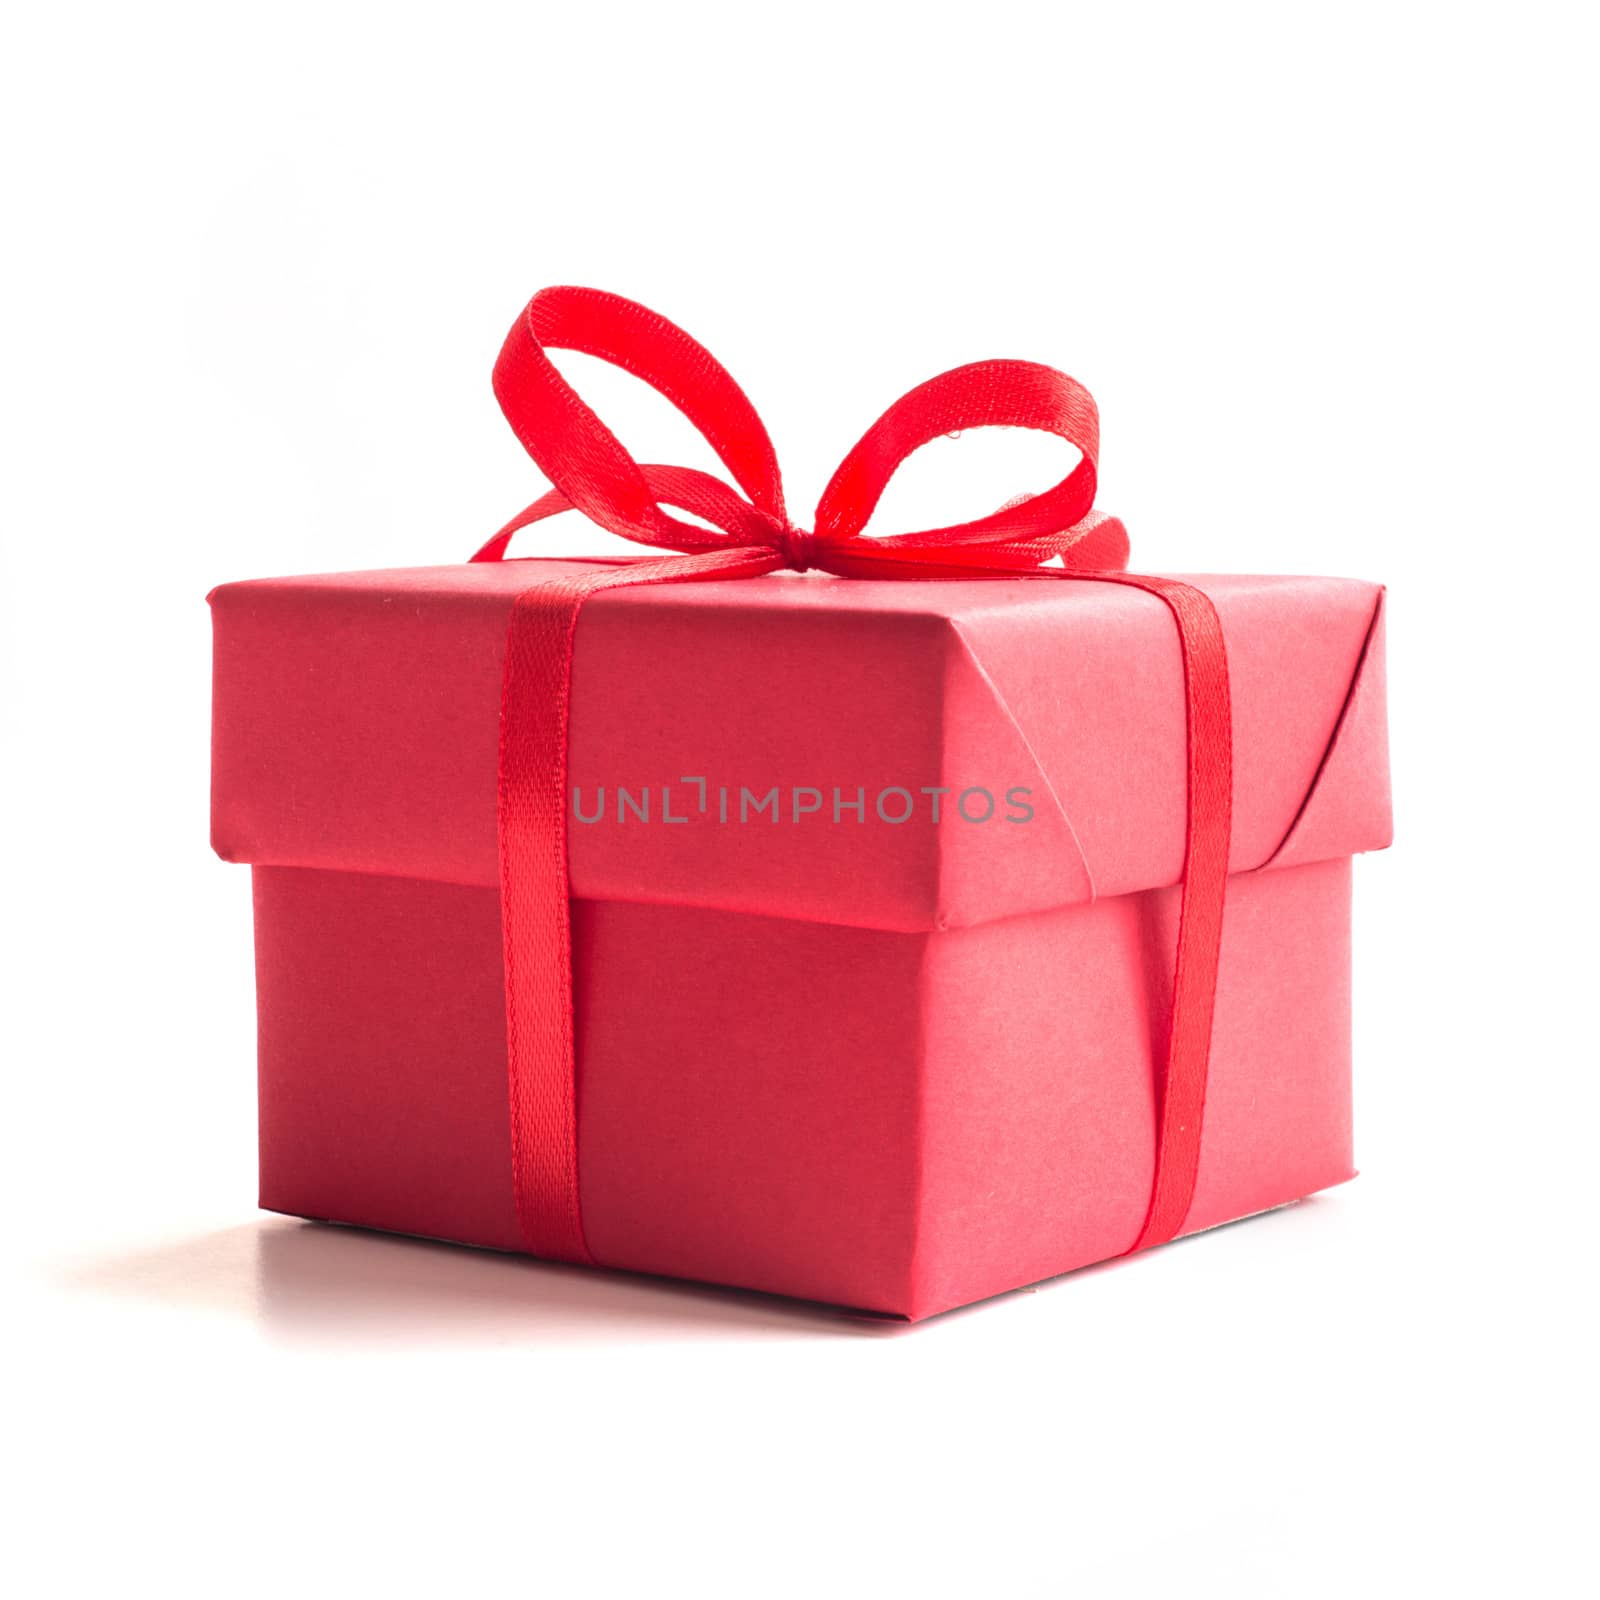 Red gift boxe on white by destillat